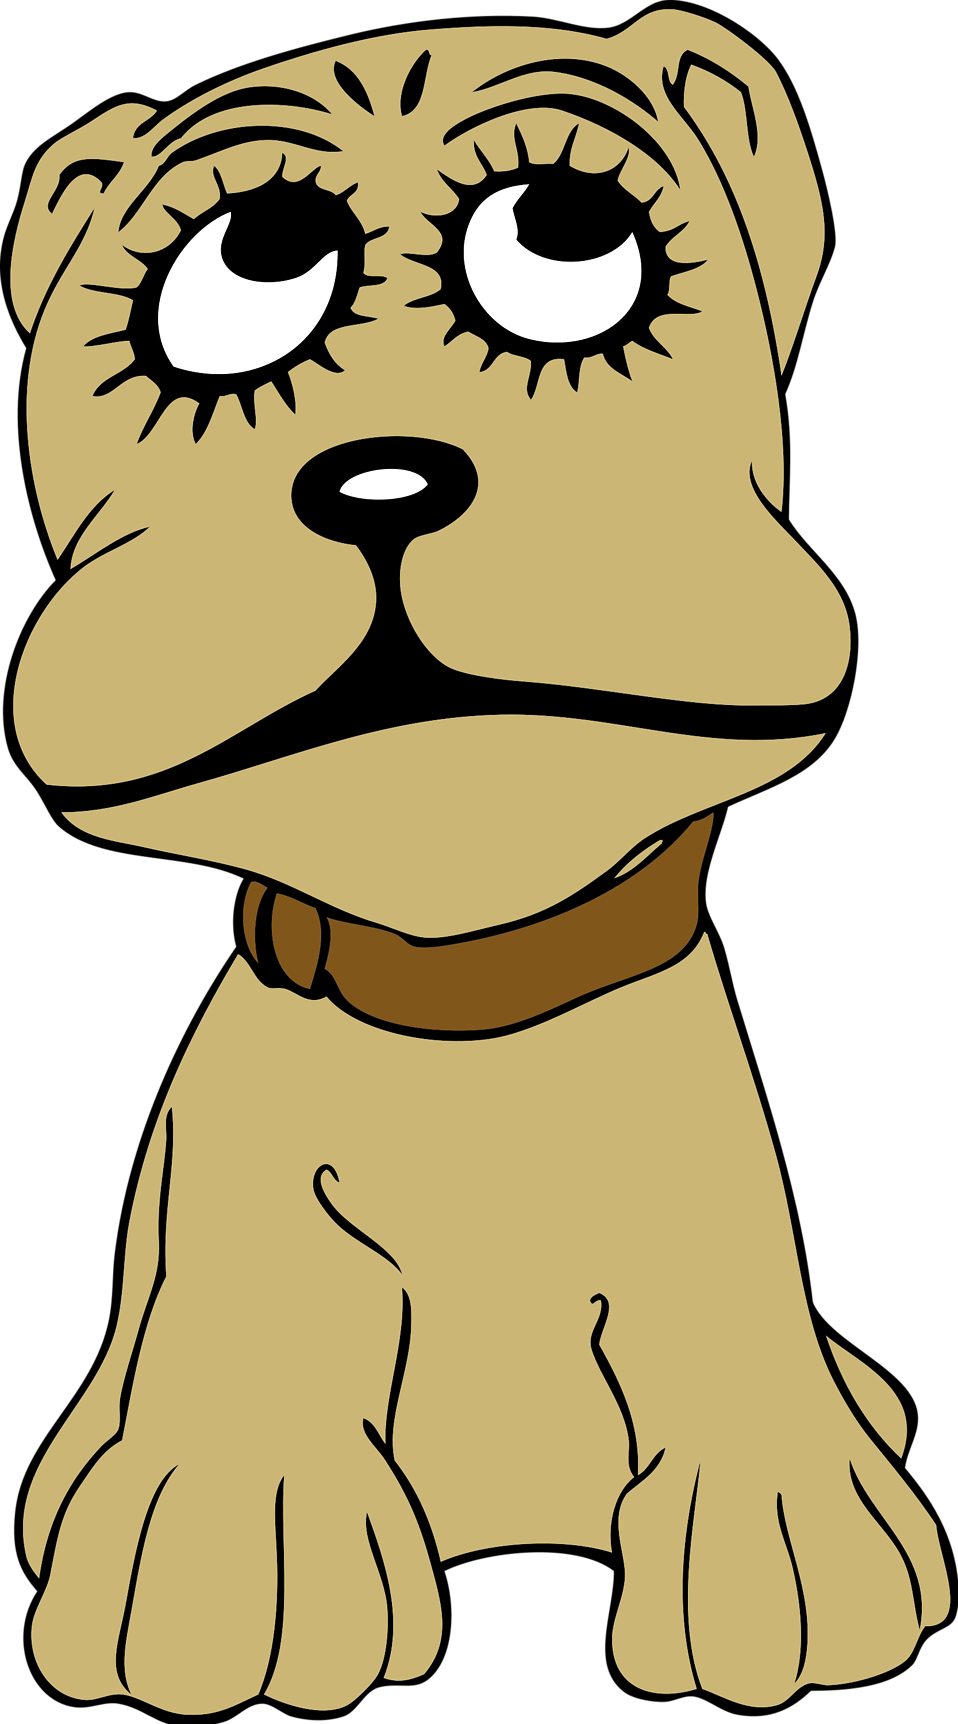 Puppy   Free Stock Photo   Illustration Of A Cartoon Dog     11282